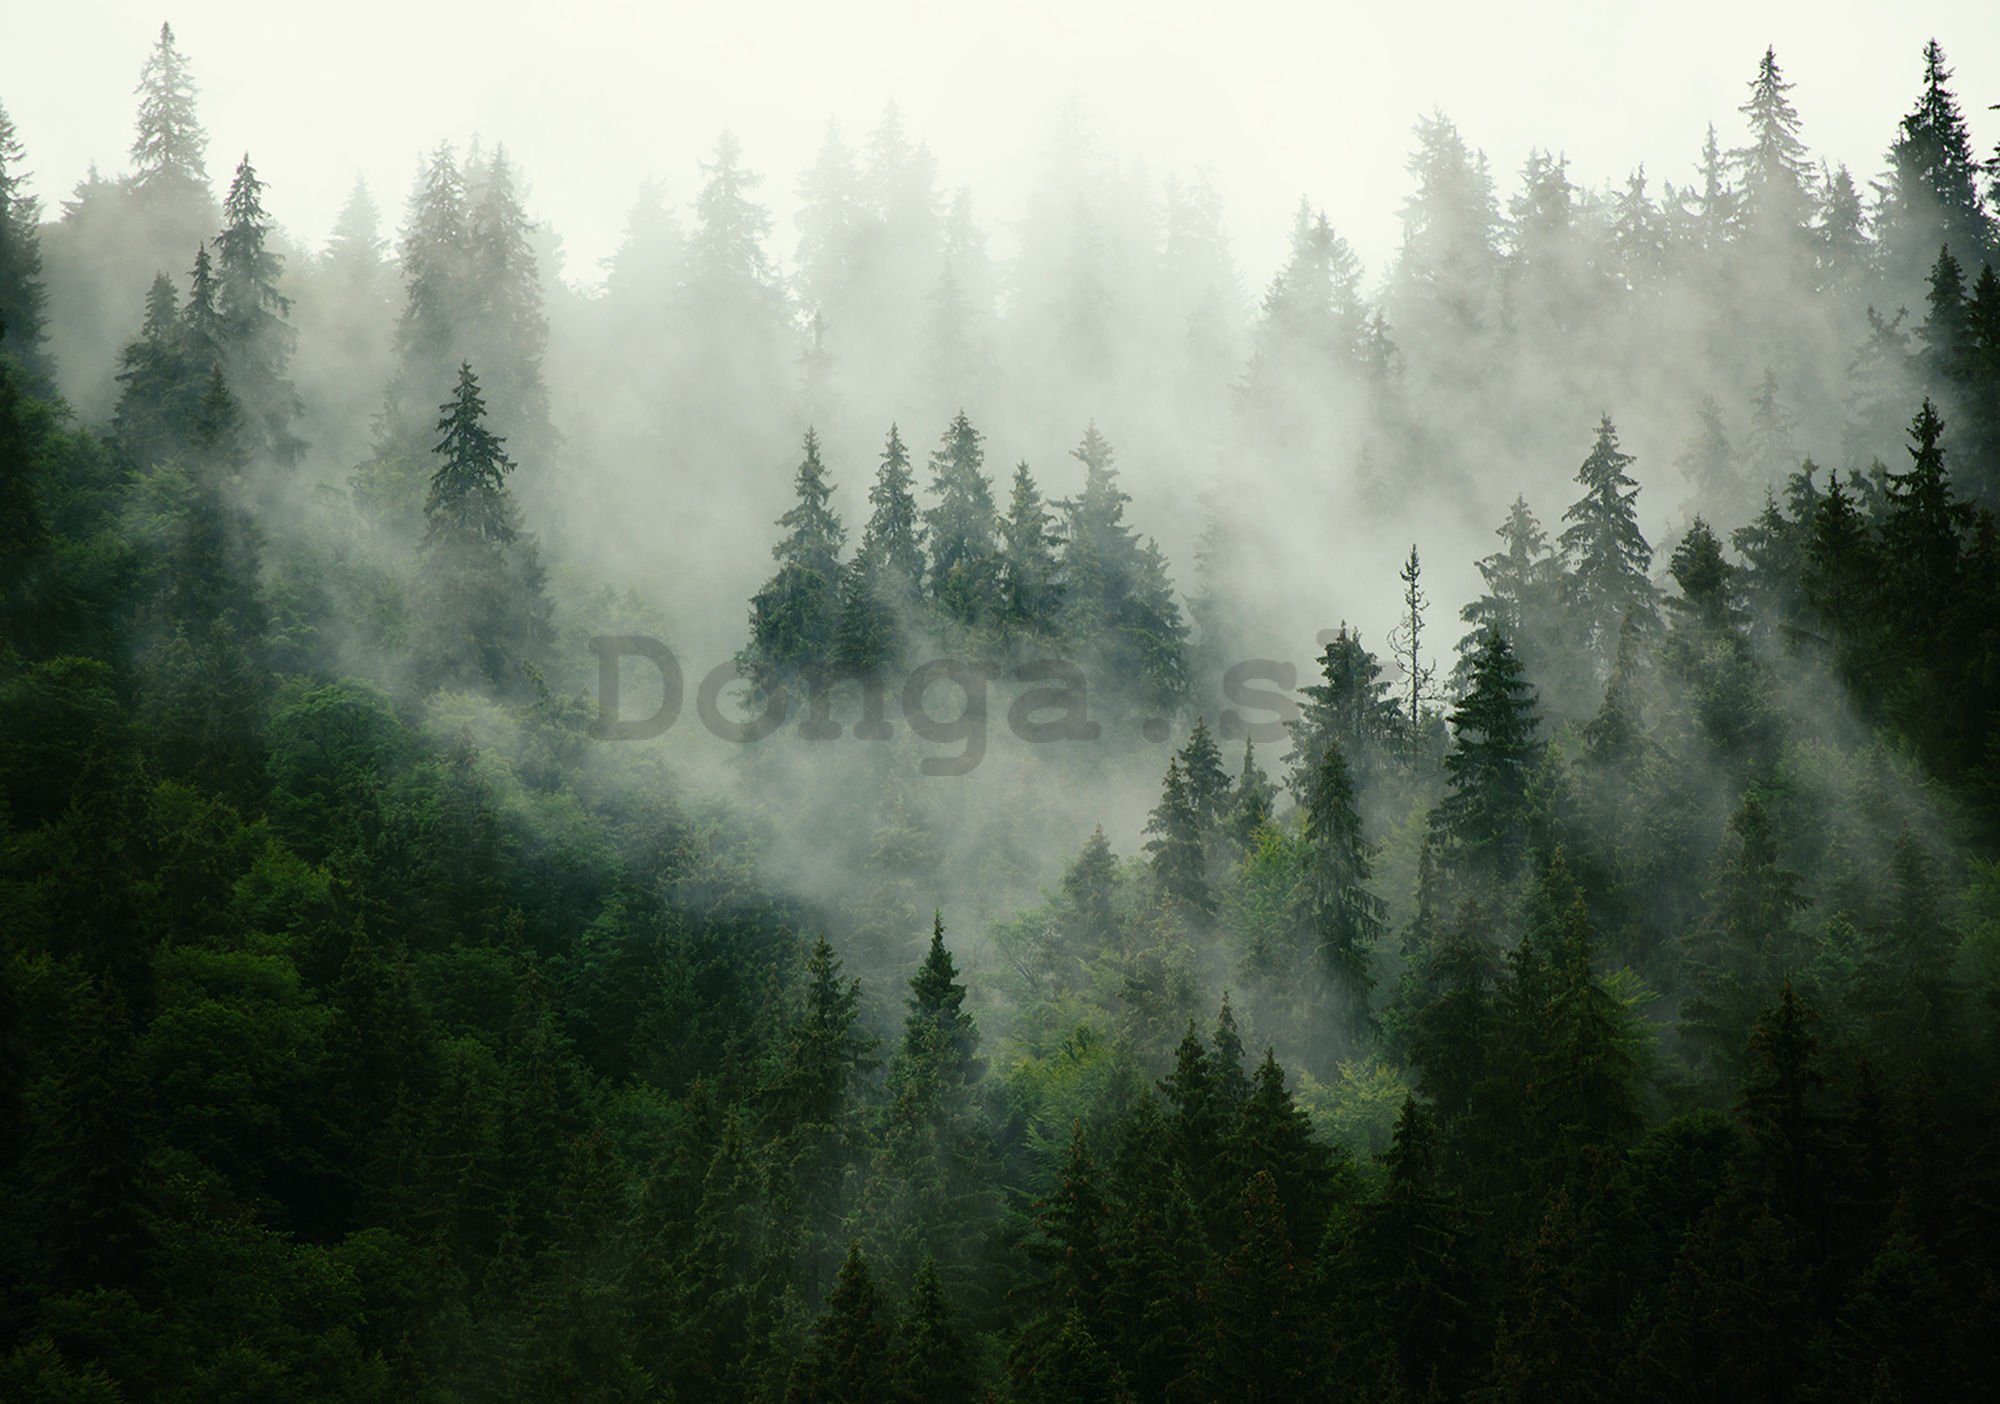 Fototapeta: Hmla nad lesom (1) - 184x254 cm